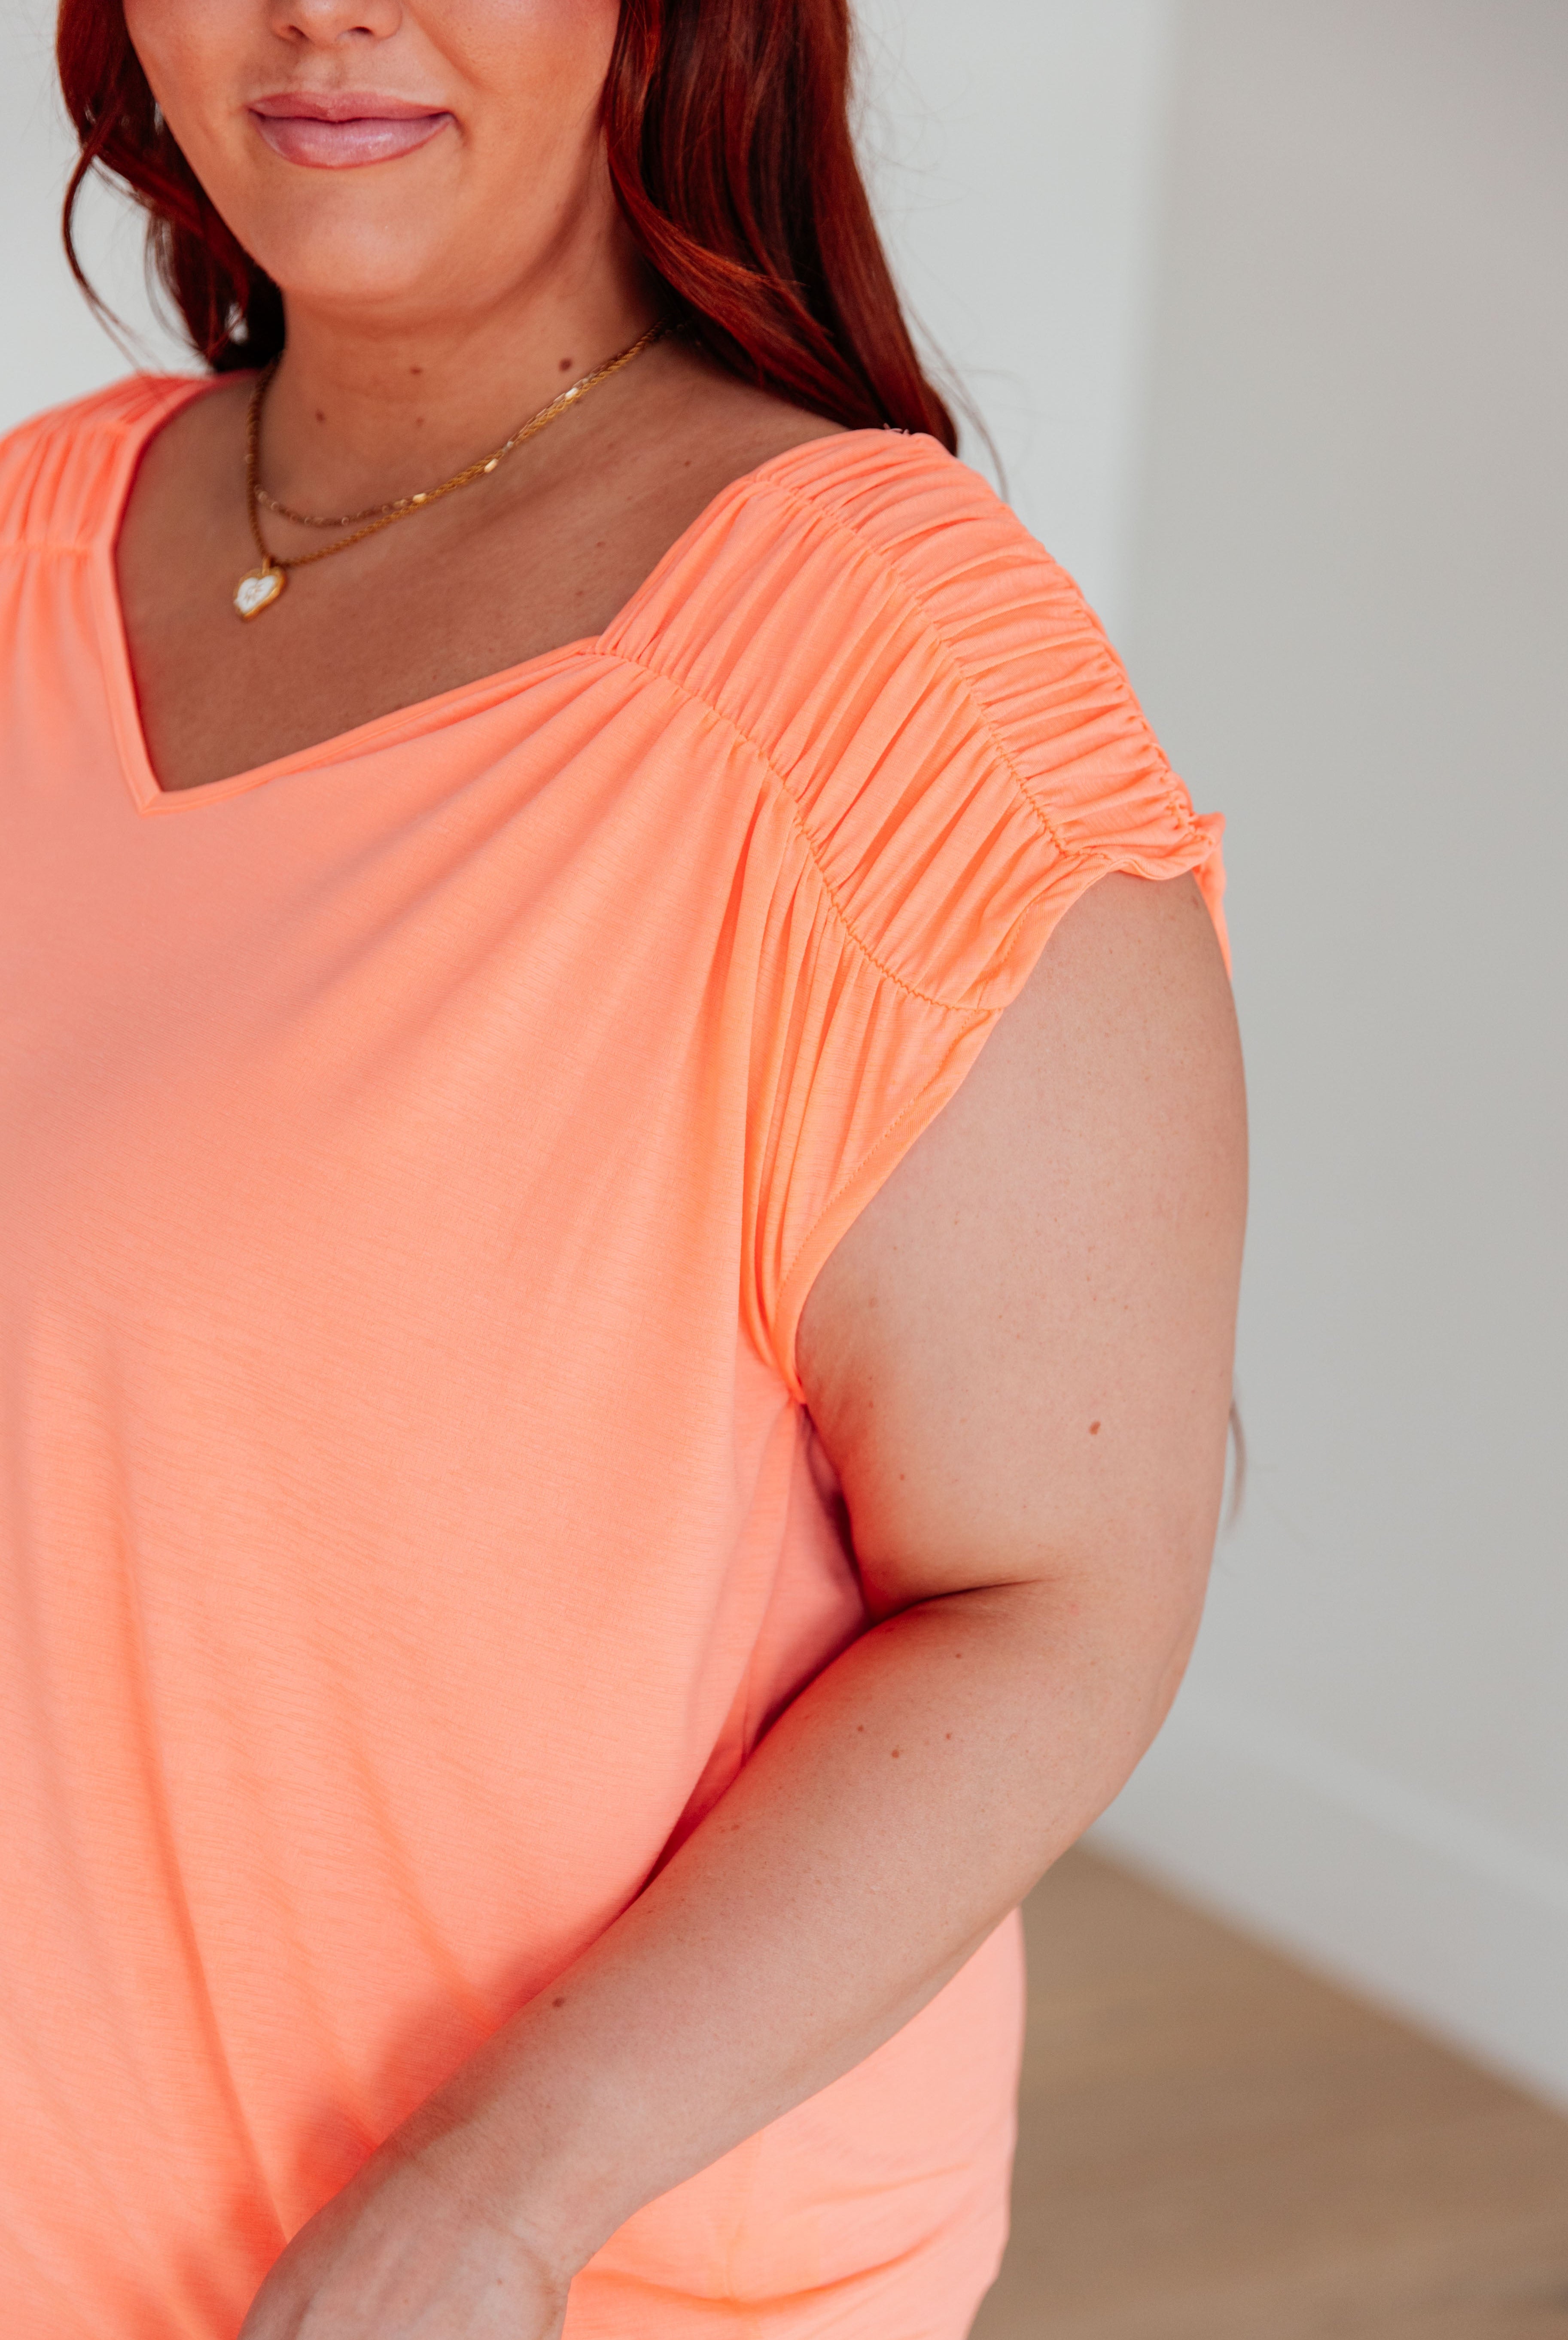 Ruched Cap Sleeve Top in Neon Orange-Short Sleeve Tops-Krush Kandy, Women's Online Fashion Boutique Located in Phoenix, Arizona (Scottsdale Area)